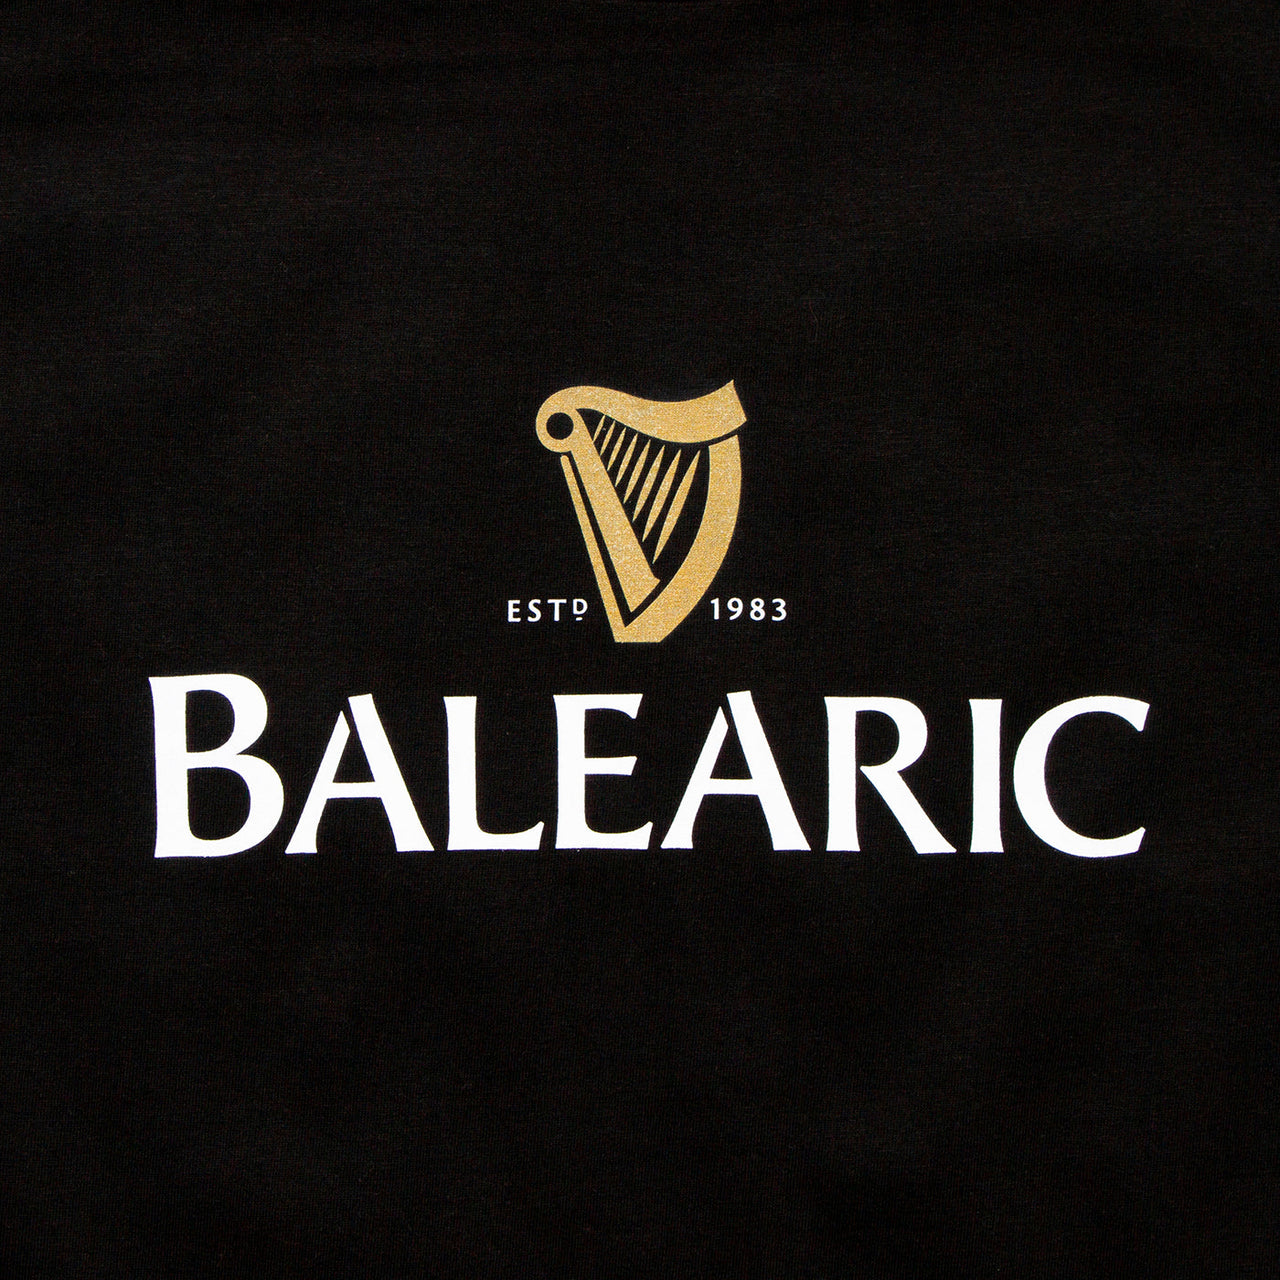 Crest Balearic Harp - Tshirt - Black or Green